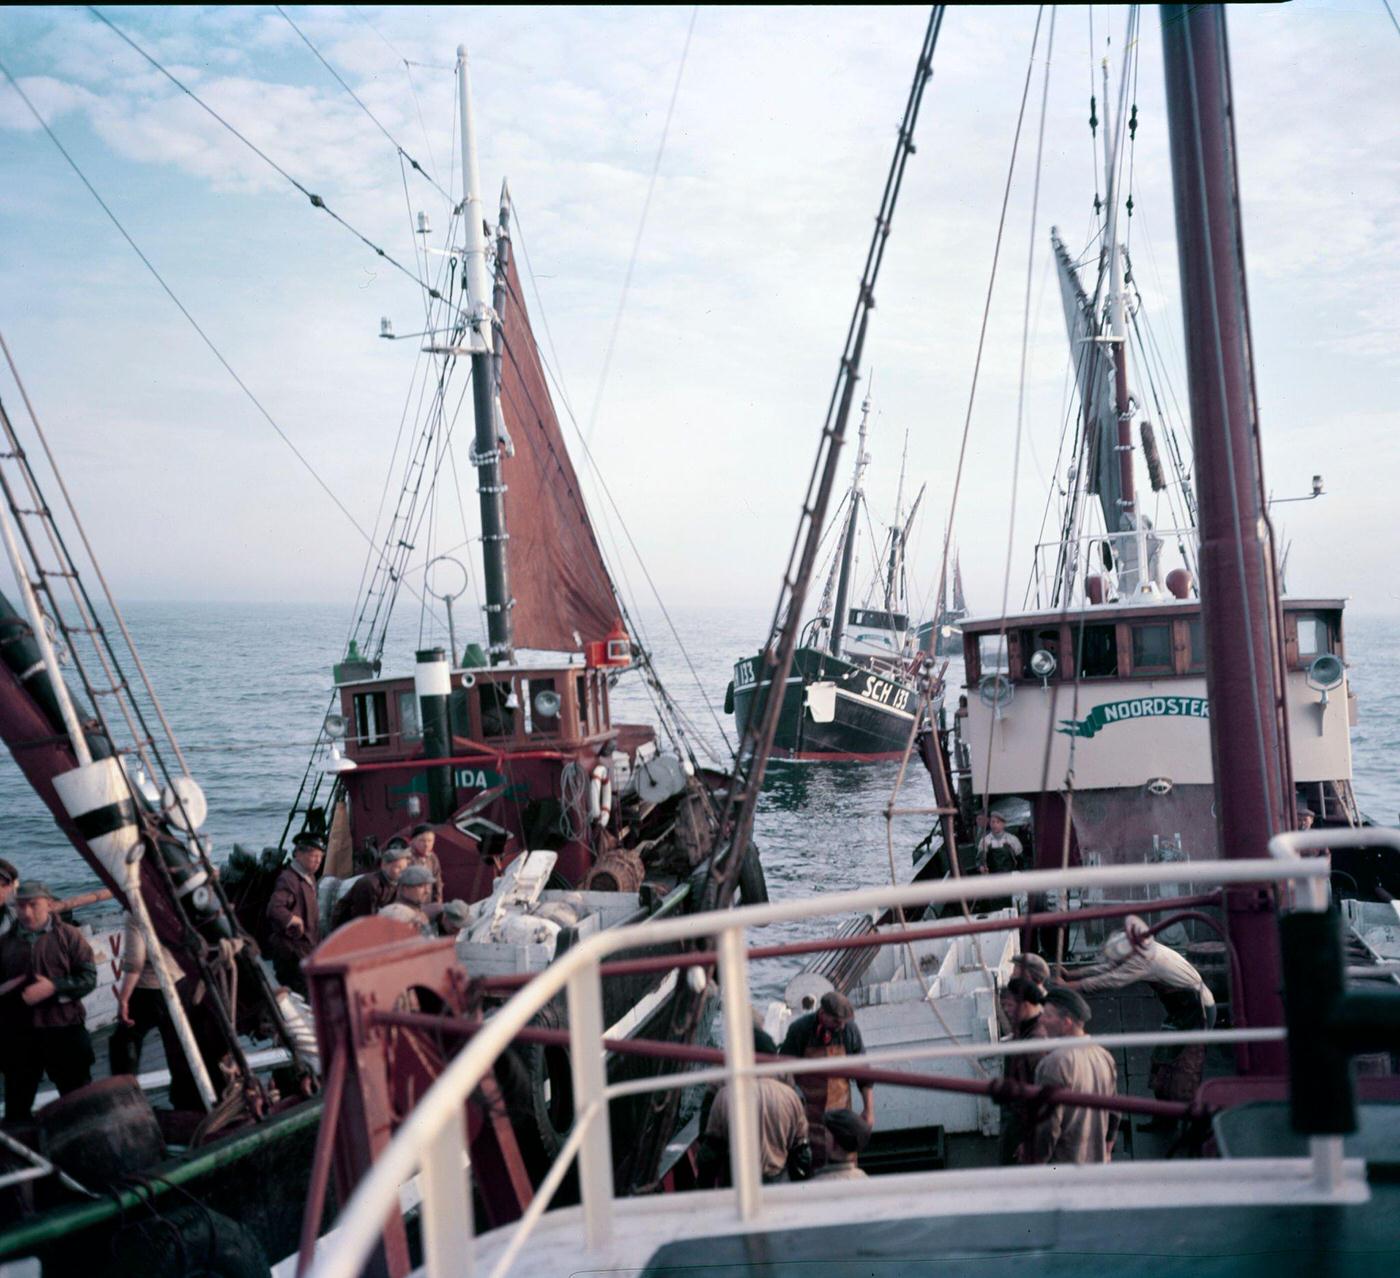 Herring fishing in the North Sea near Scheveningen, the Netherlands, 1954.